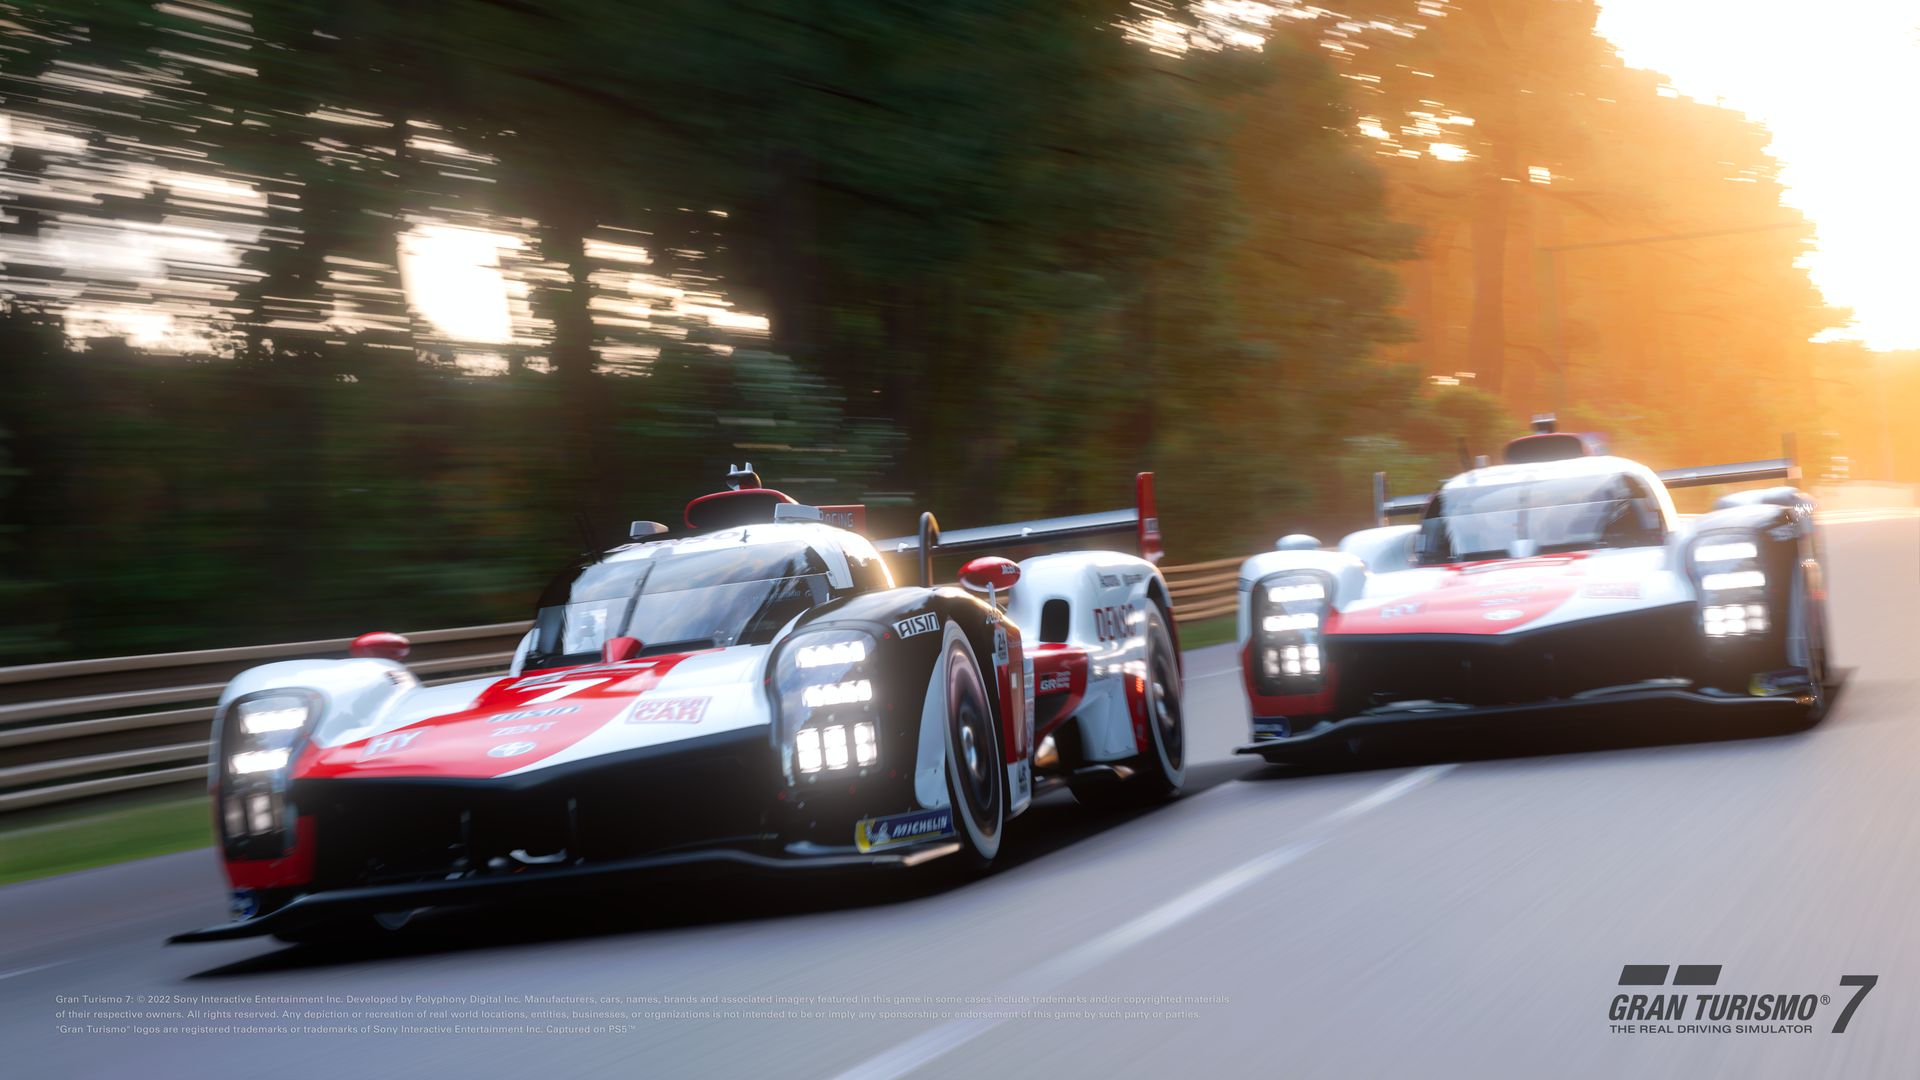 Gran Turismo 7 Update 1.36 adds 4 new cars, three Extra Menus, and